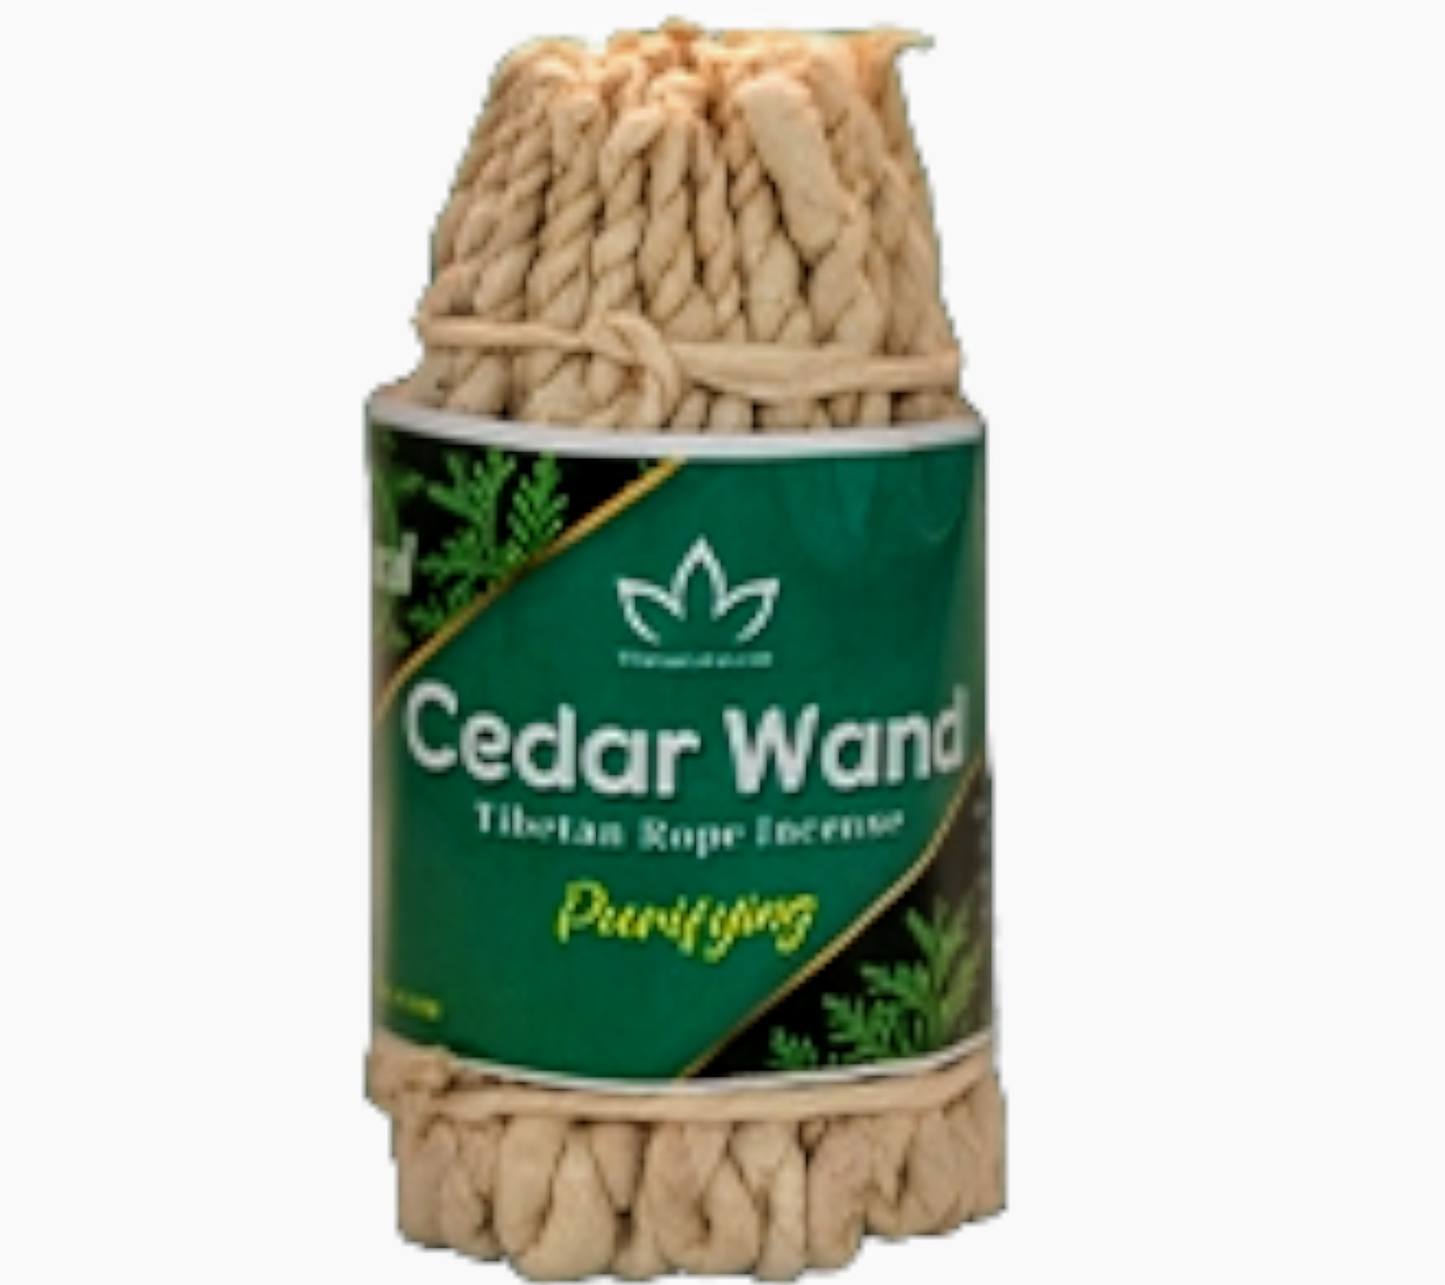 X-LG Cedar Wands Rope Incense